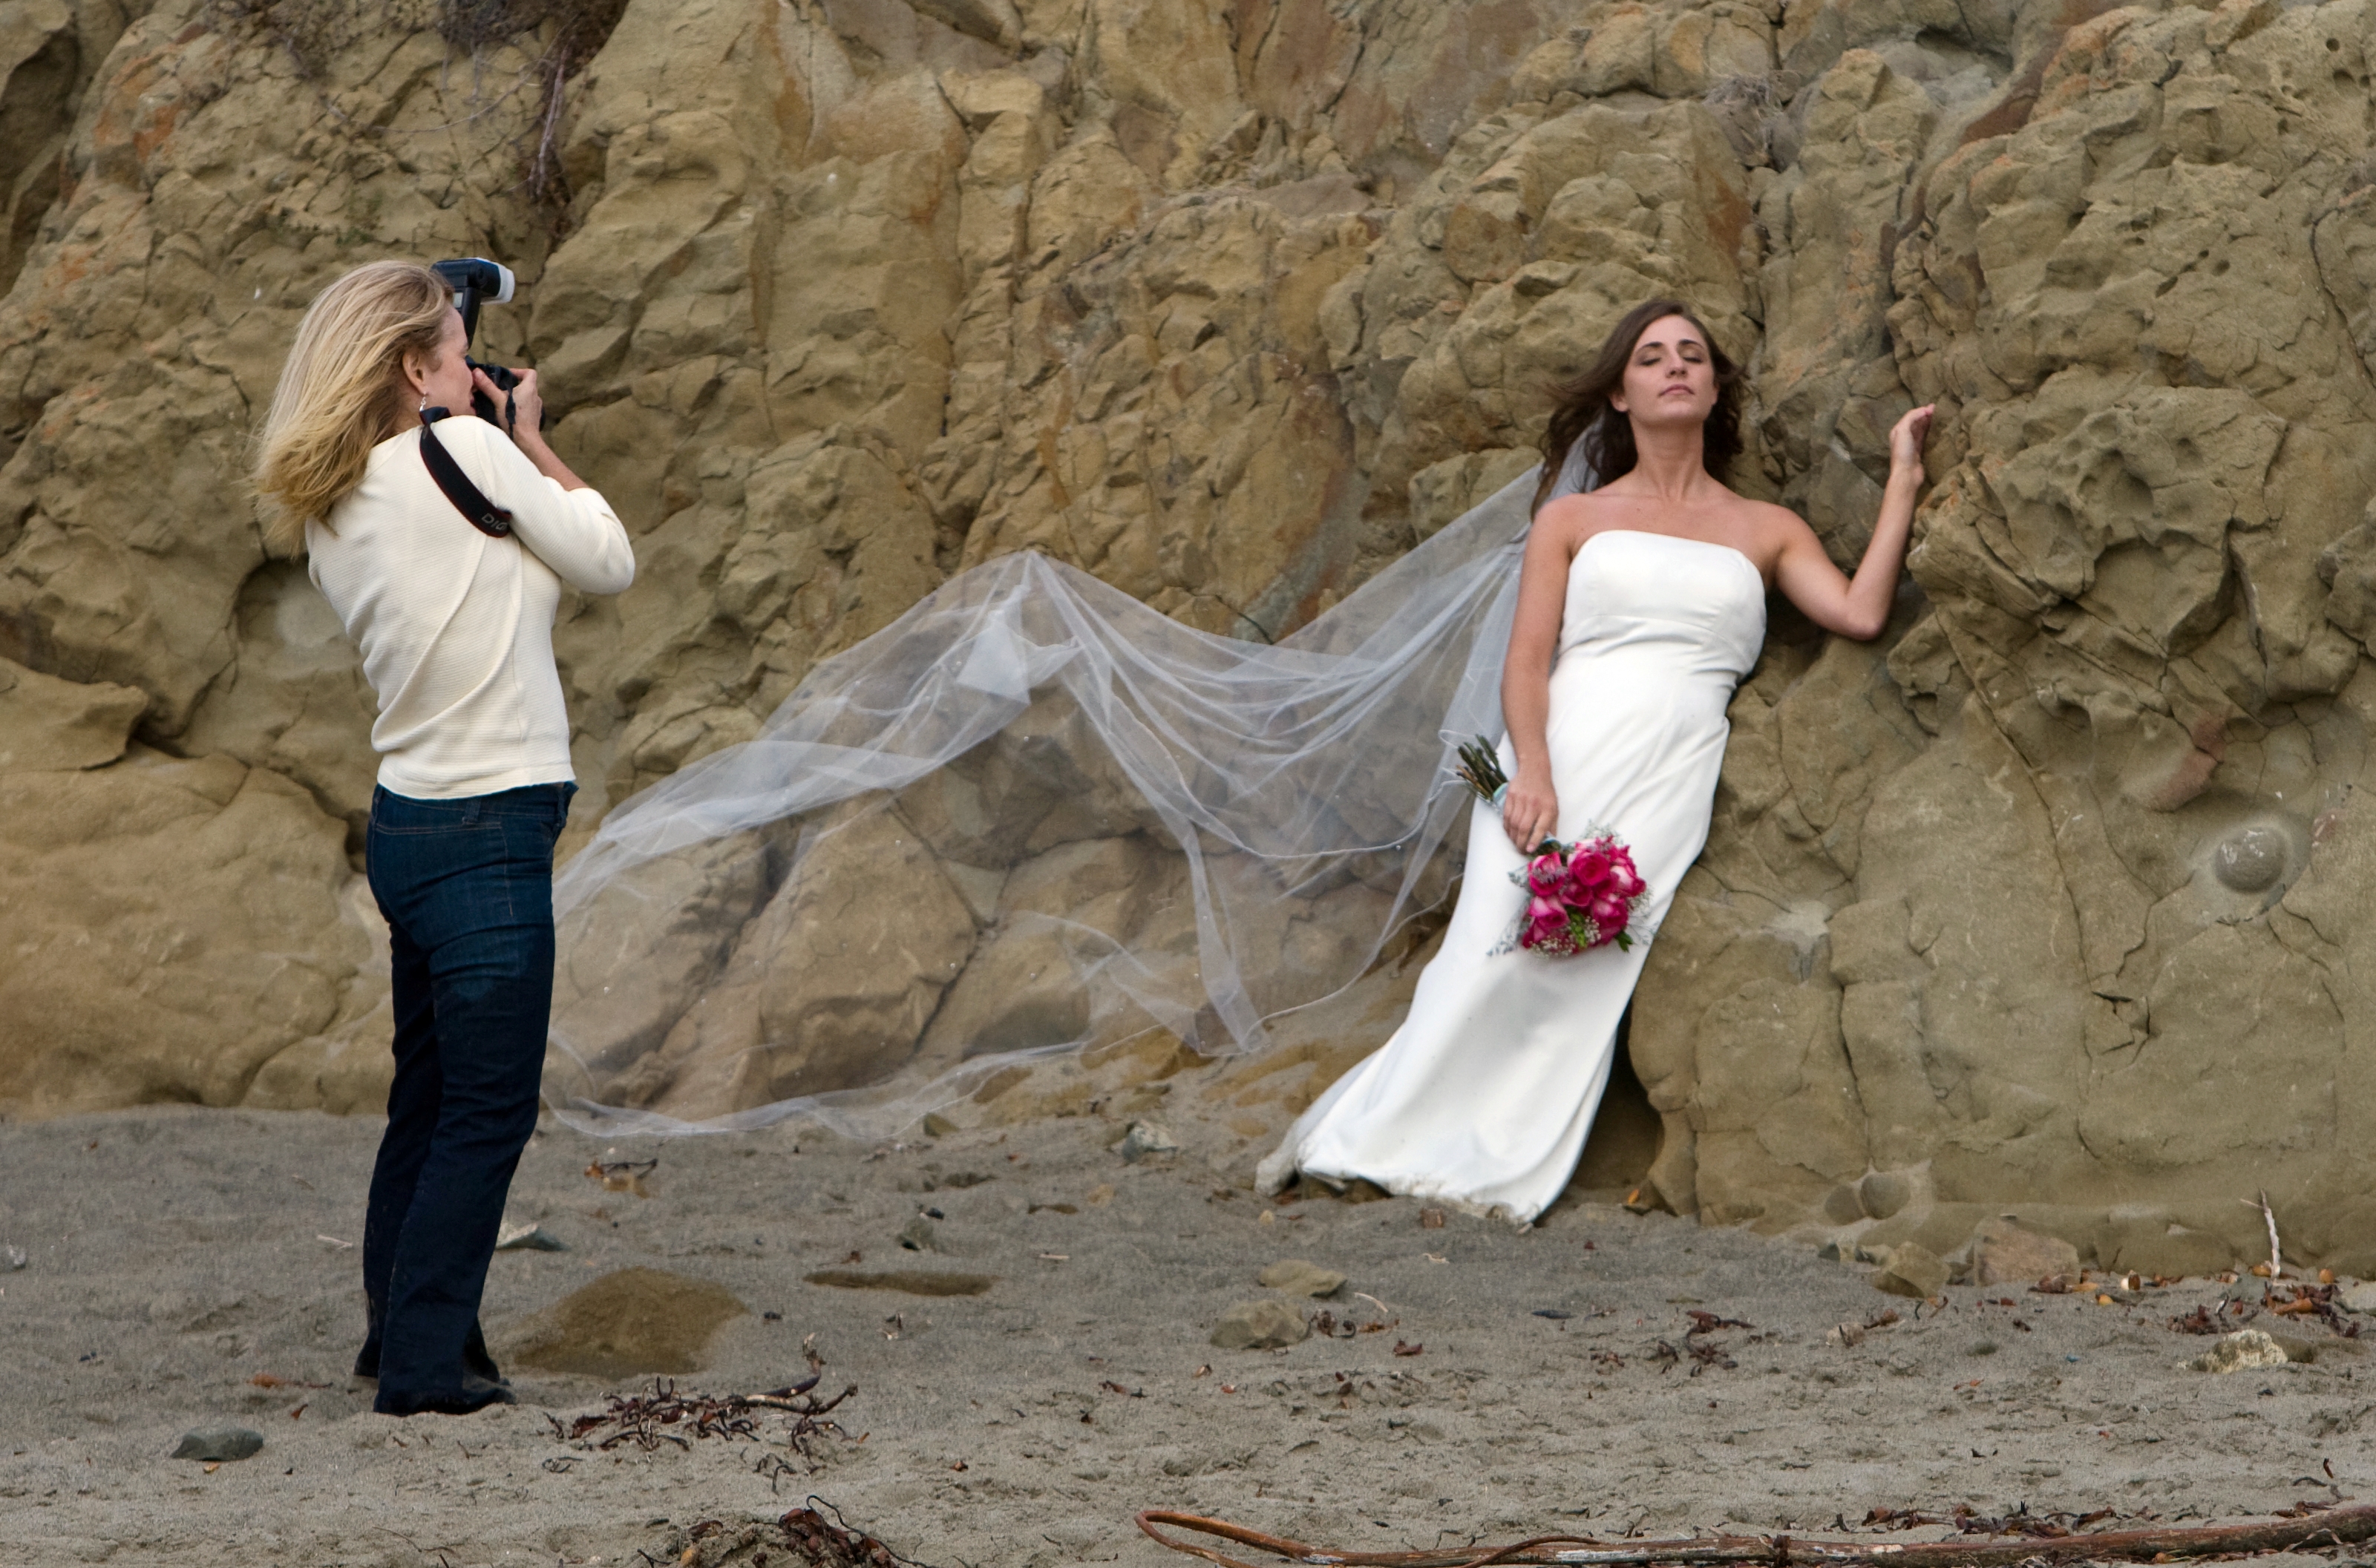 http://upload.wikimedia.org/wikipedia/commons/1/17/Wedding_photographer_preparing_shot.jpg